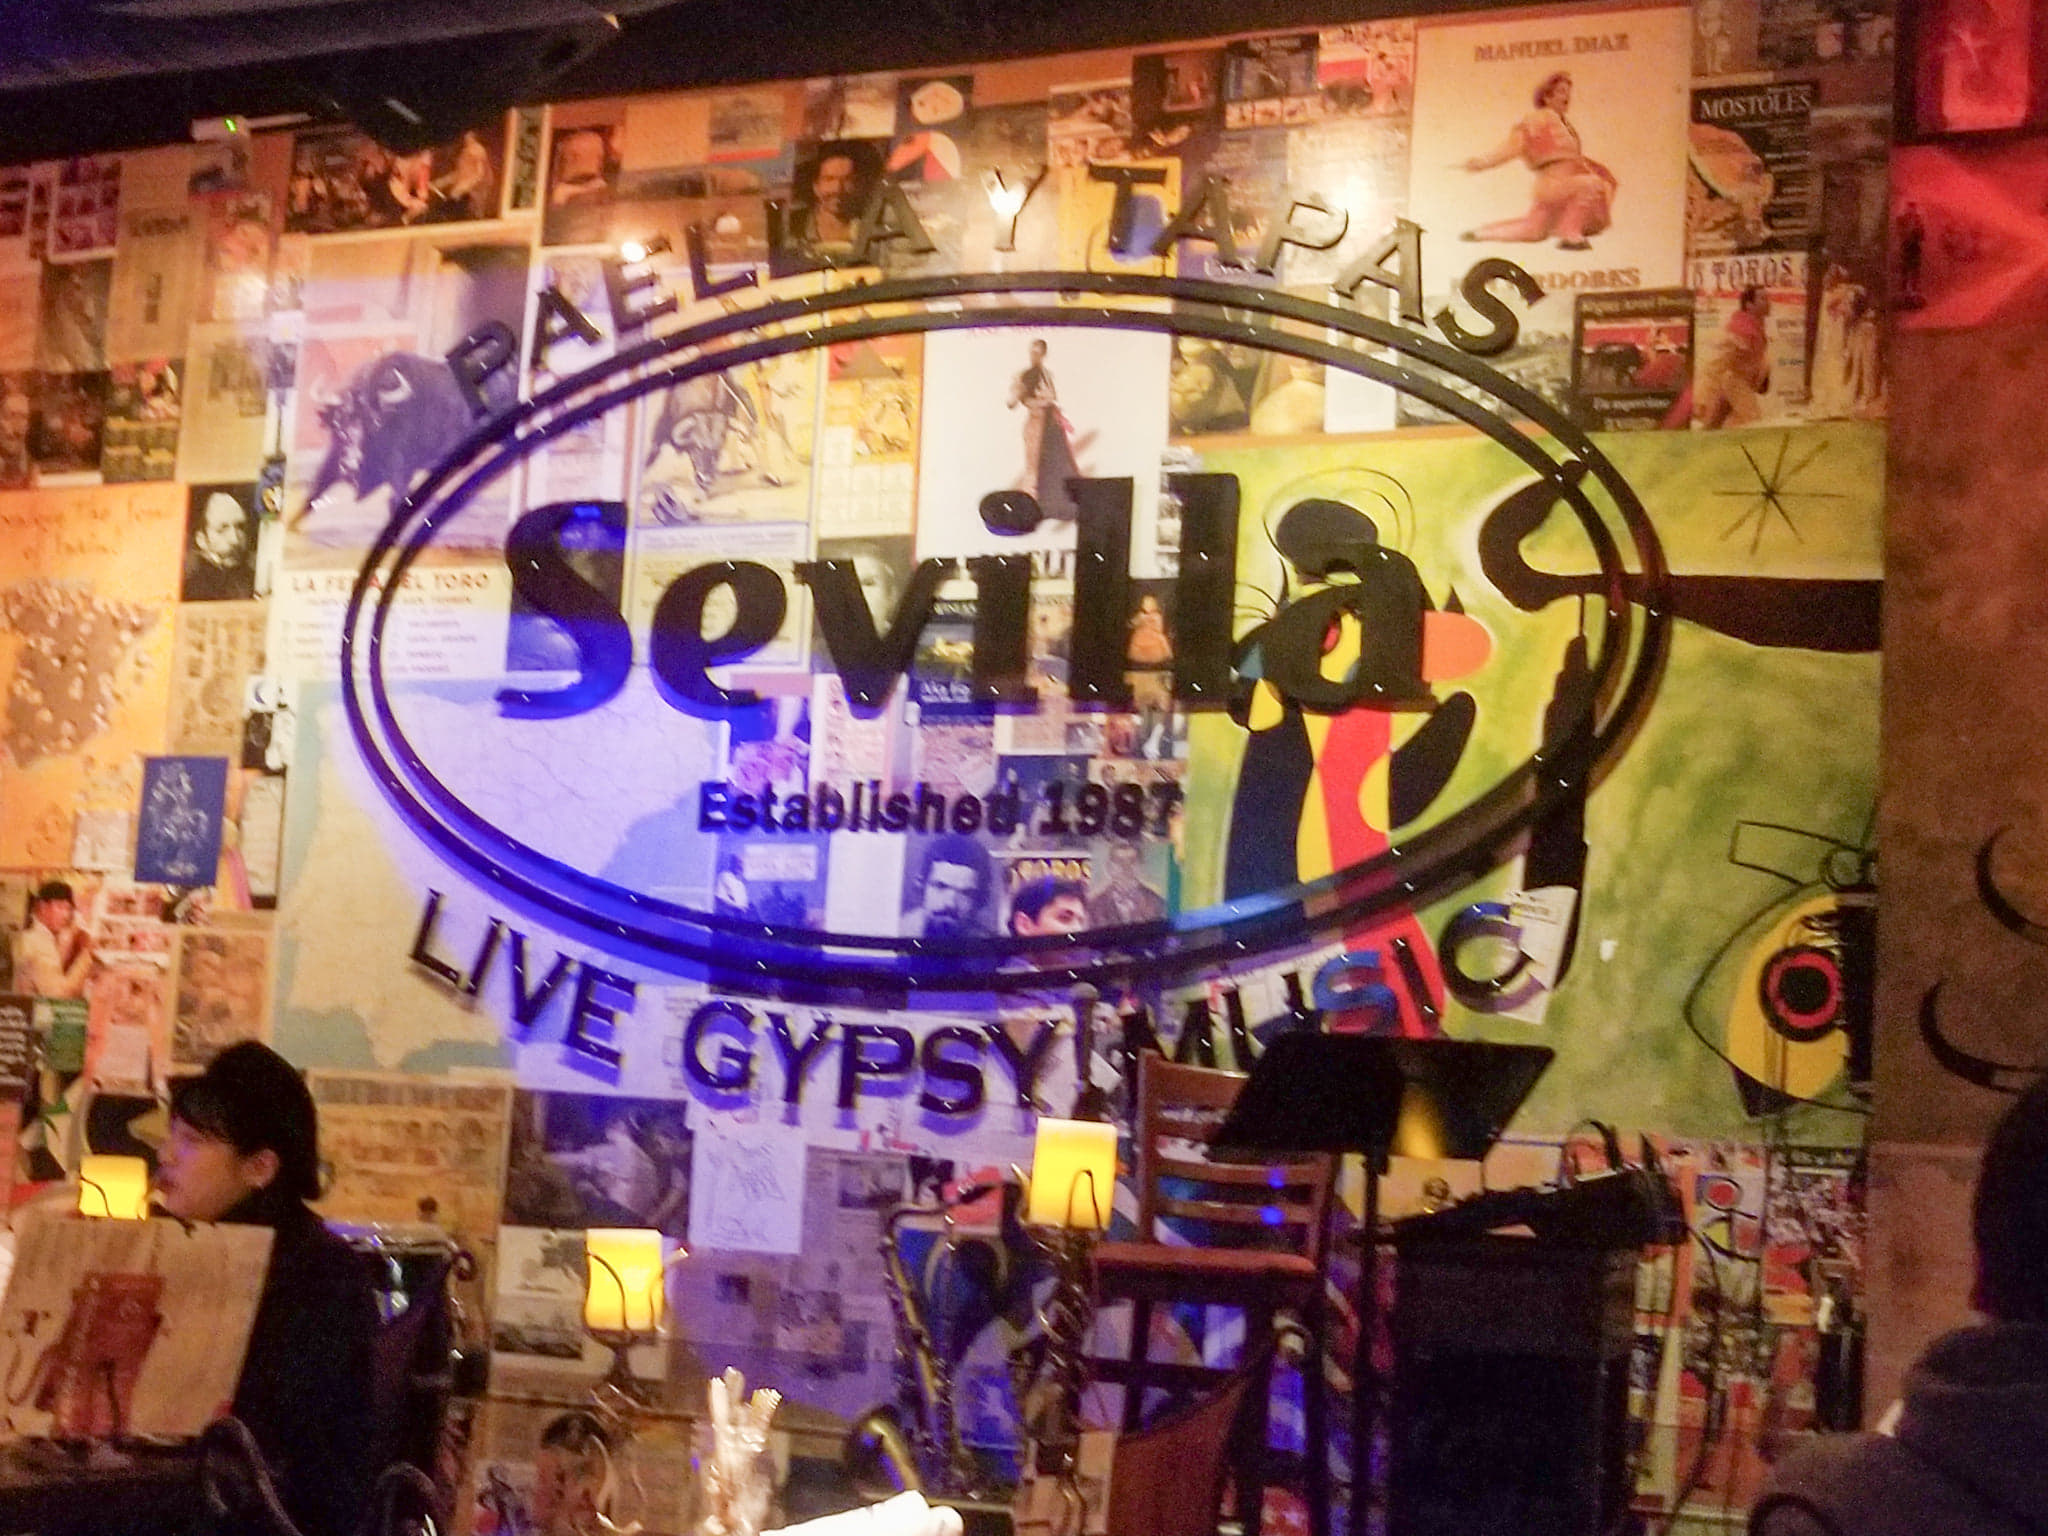 Cafe Sevilla Long Beach tapas bar night club